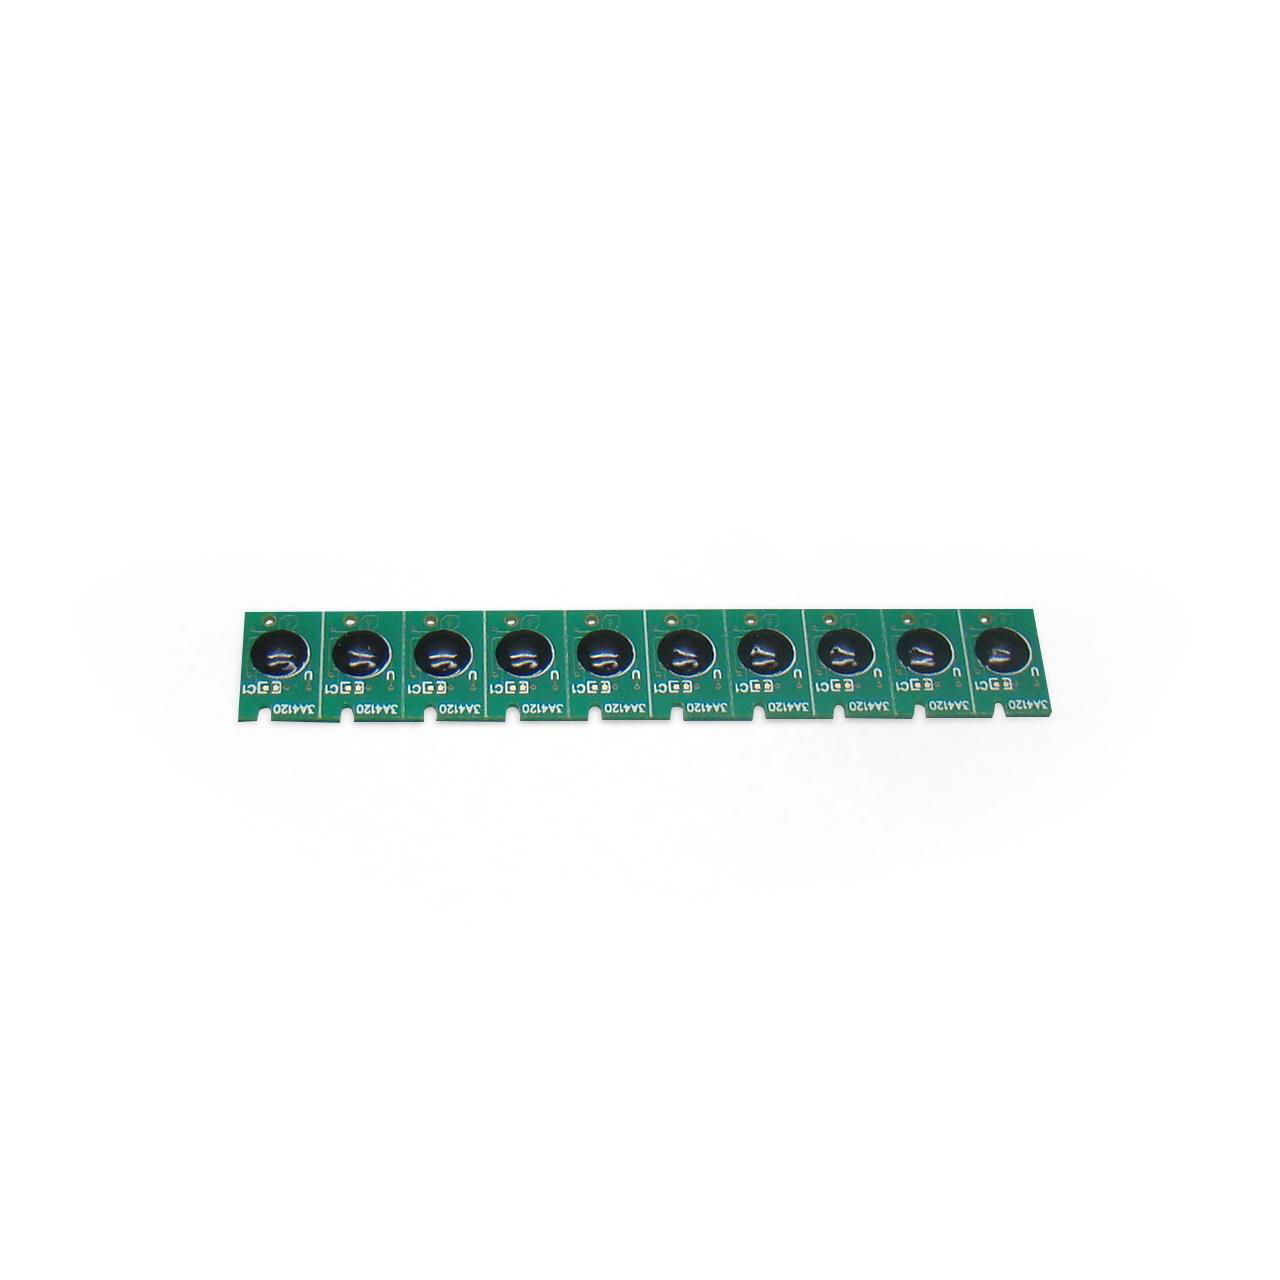 廢墨倉帶芯片 for Epson P7500/9500 P6000/7000/8000/9000 4